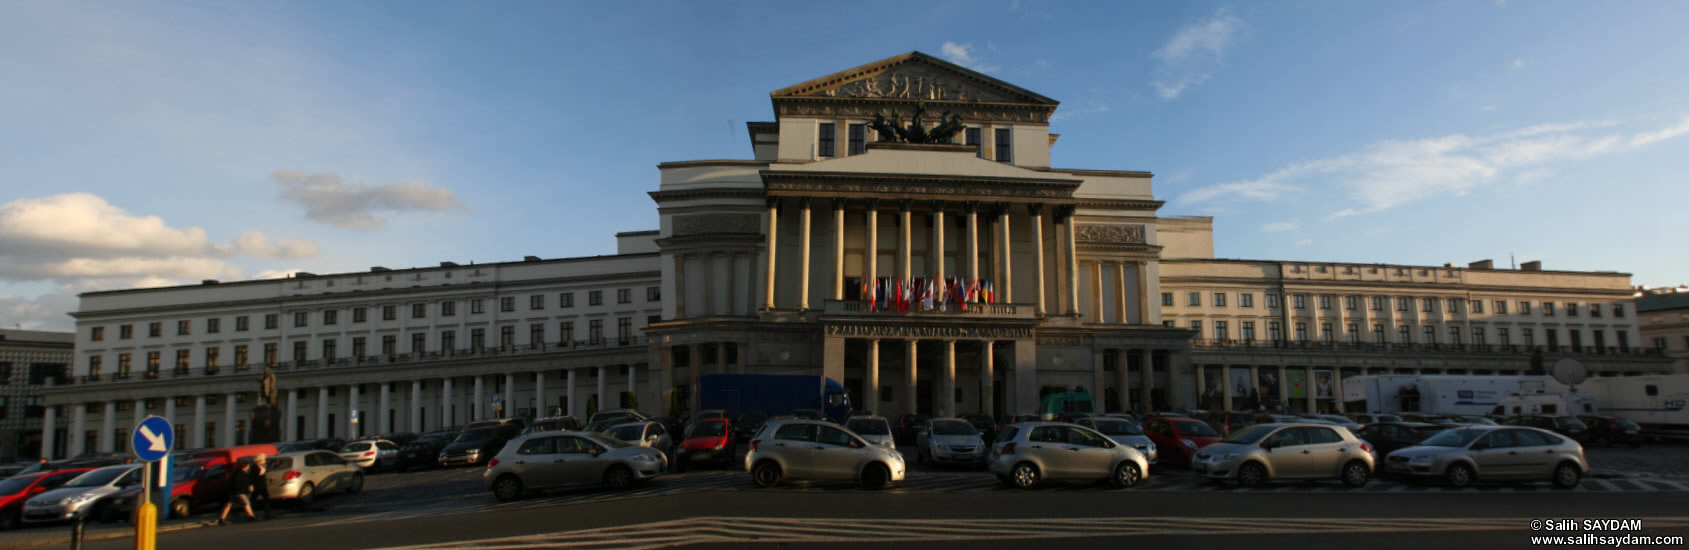 Grand Theatre-National Opera Panorama 2 (Warsaw, Poland)